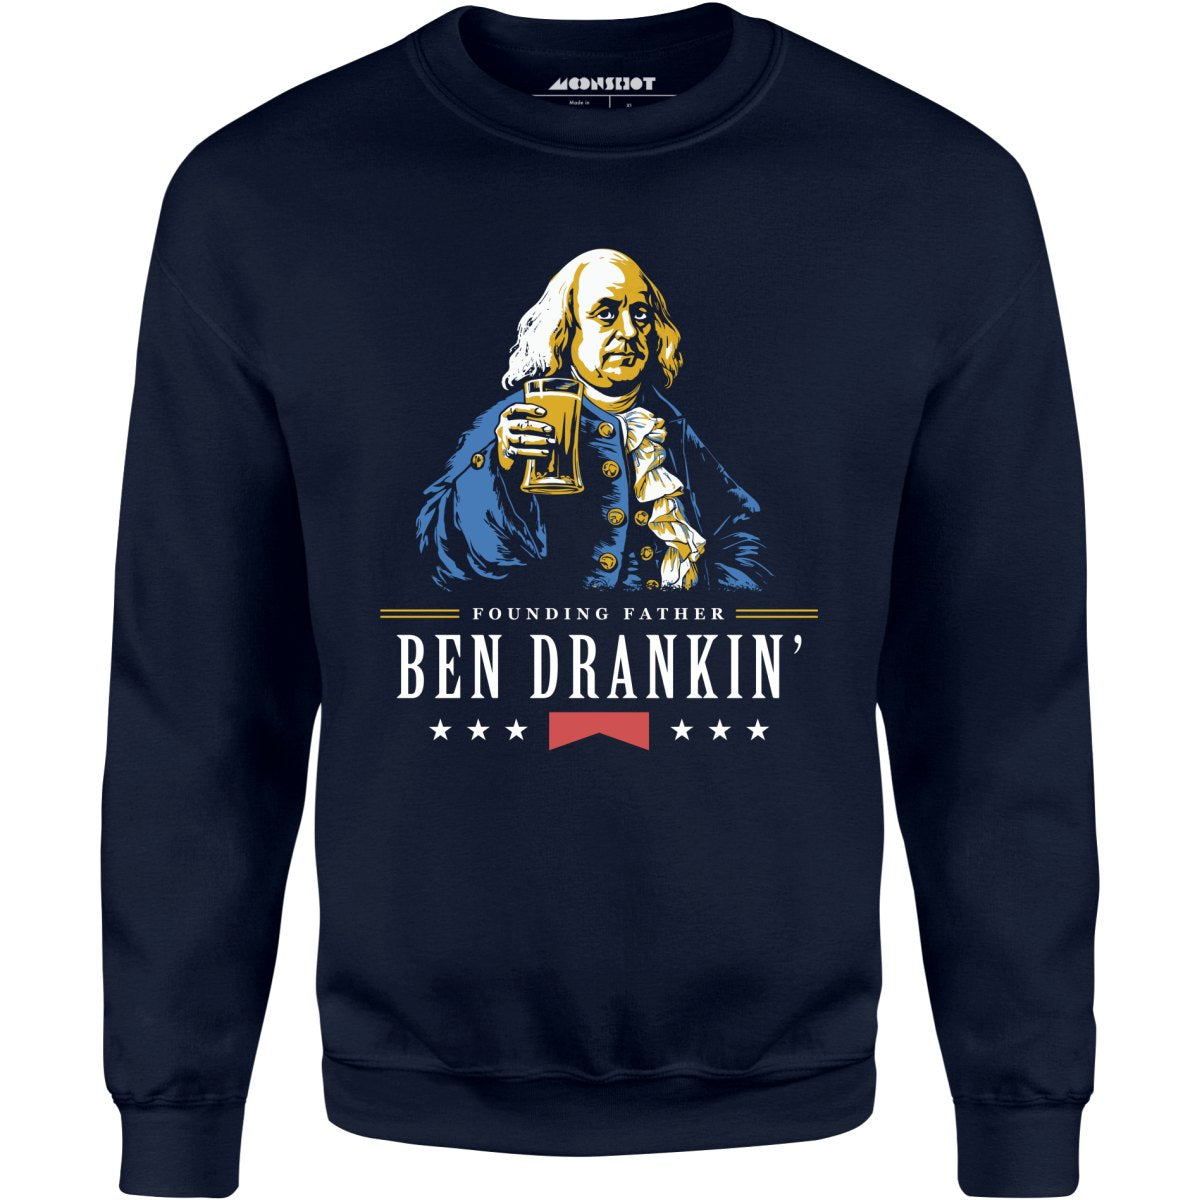 Ben Drankin' Founding Father - Unisex Sweatshirt